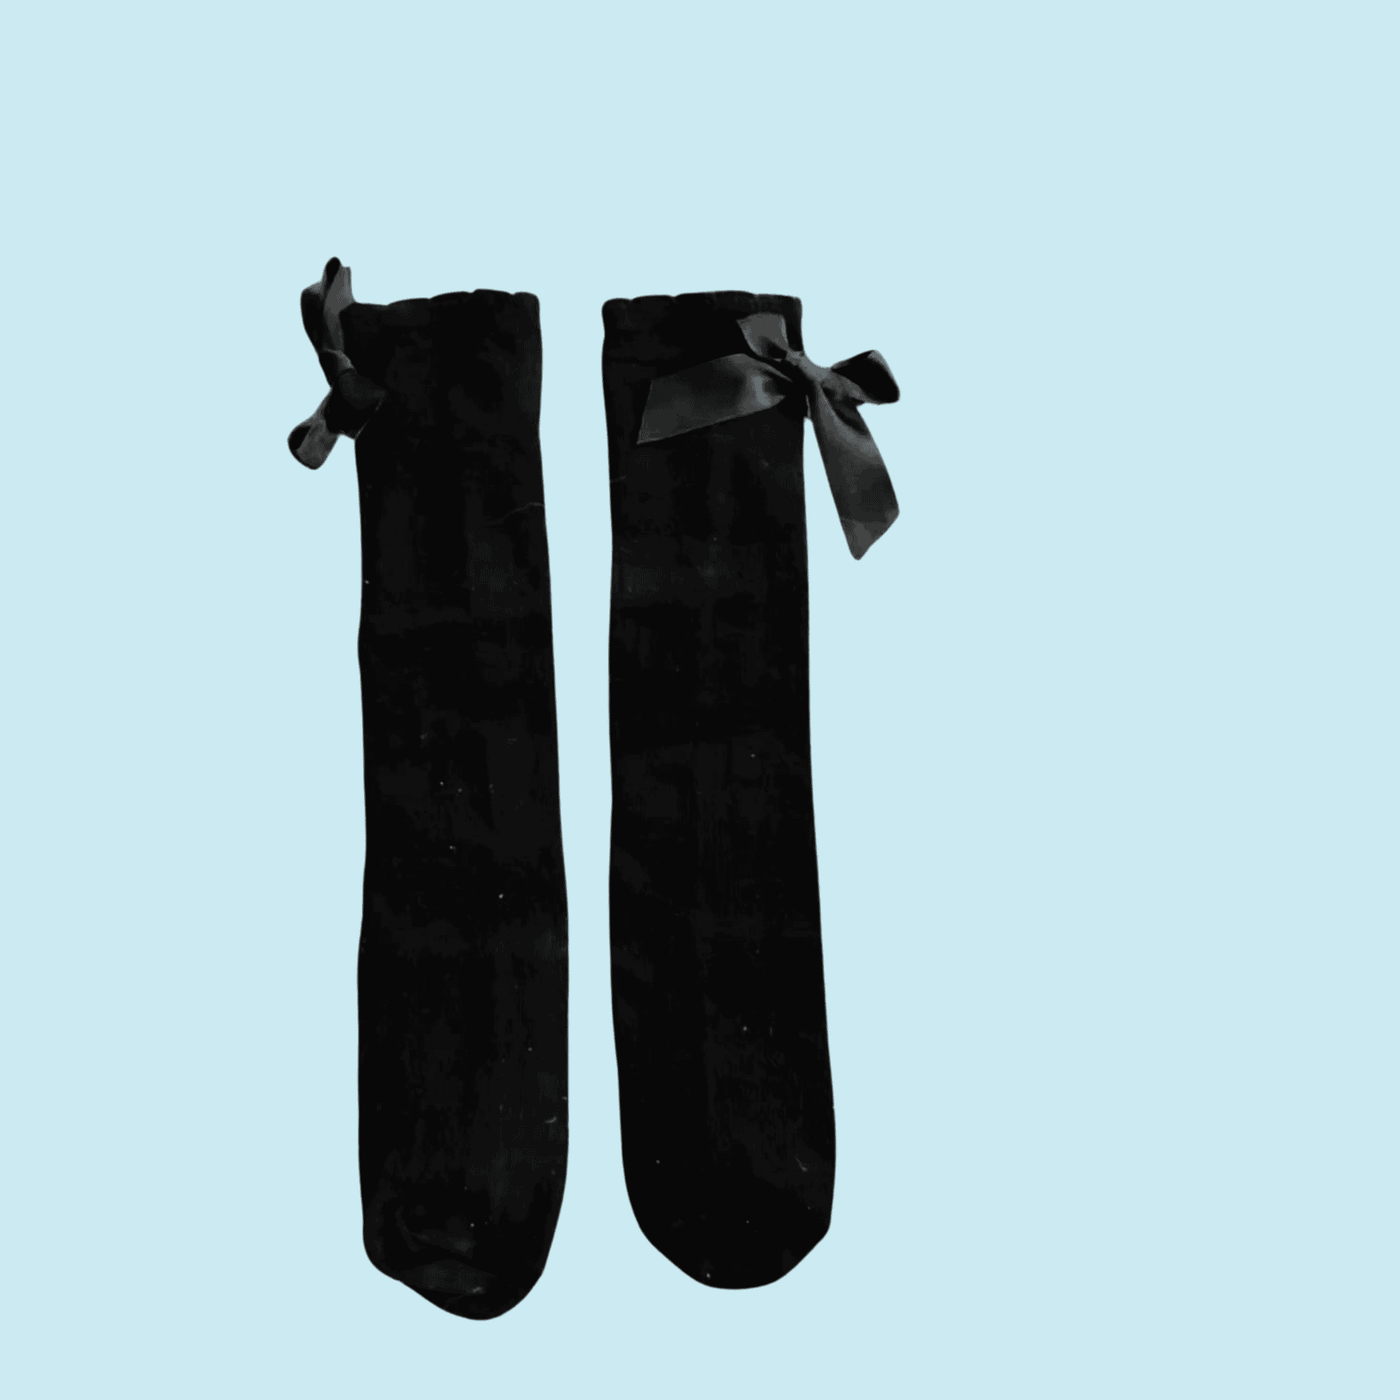 Black Stockings/Tights